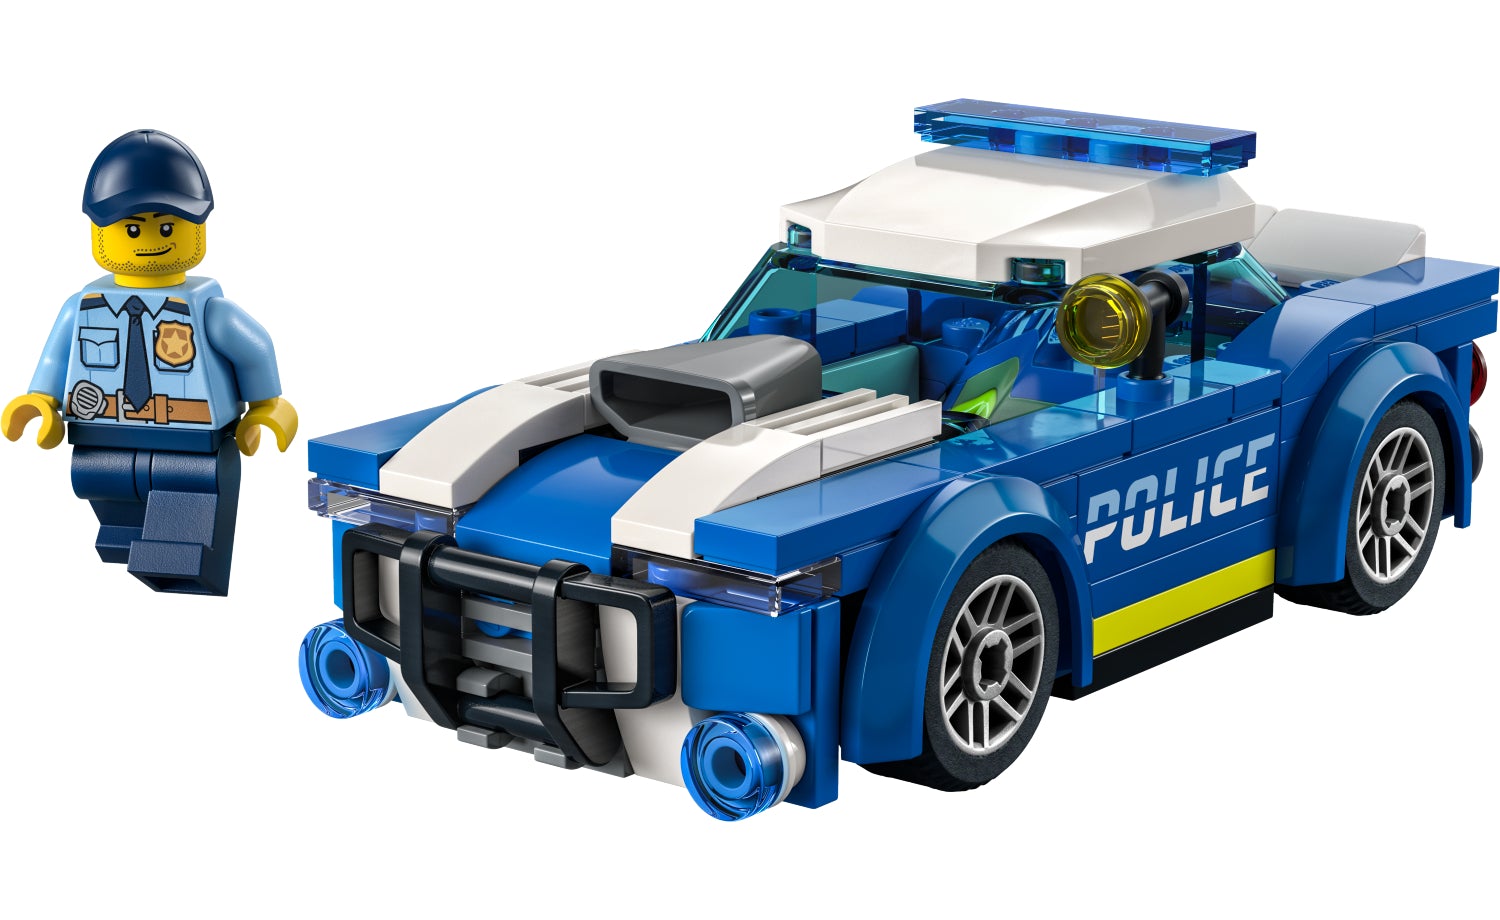 LEGO® City Police Car 60312